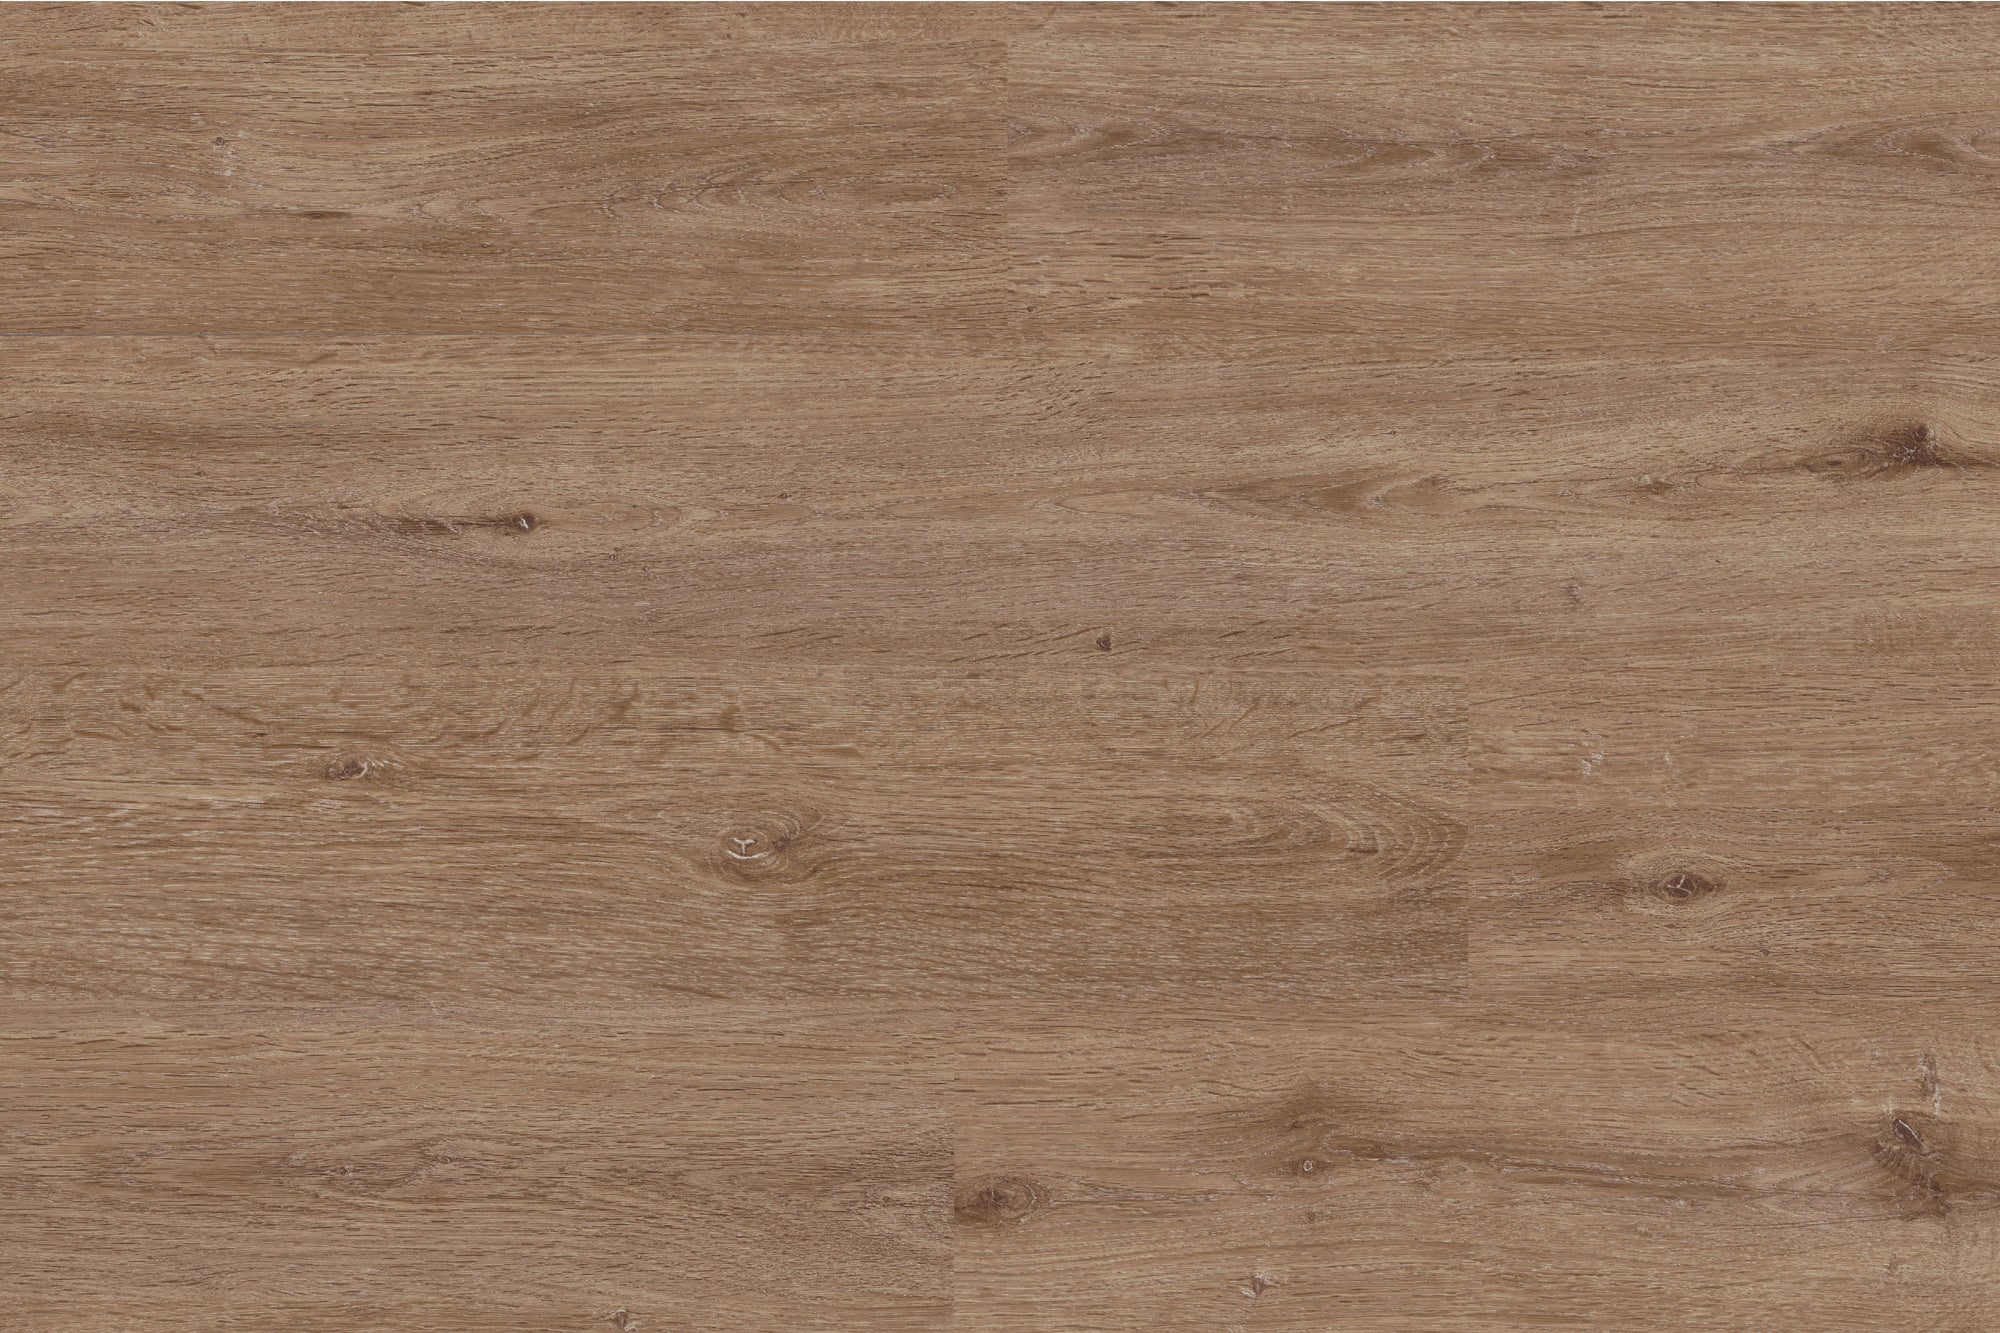 Free sample of Bronzed Urbane Glue Down Herringbone parquet hardwood flooring from our Vinyl Flooring collection